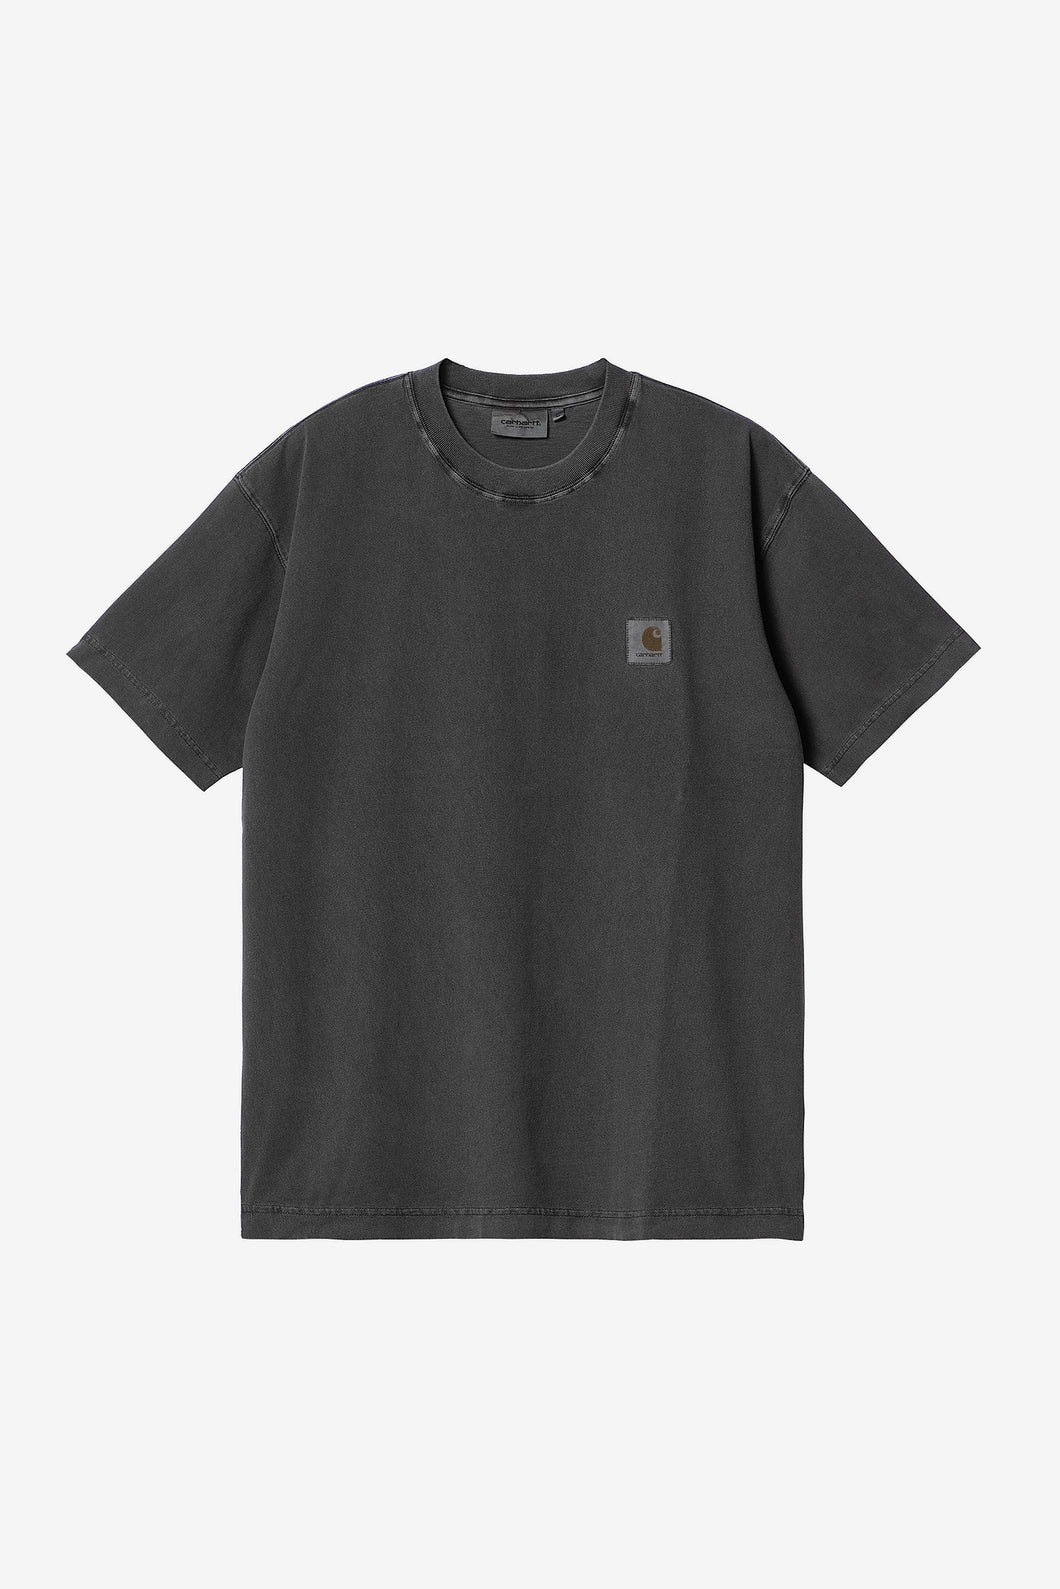 Carhartt WIP S/S Nelson T-Shirt Charcoal